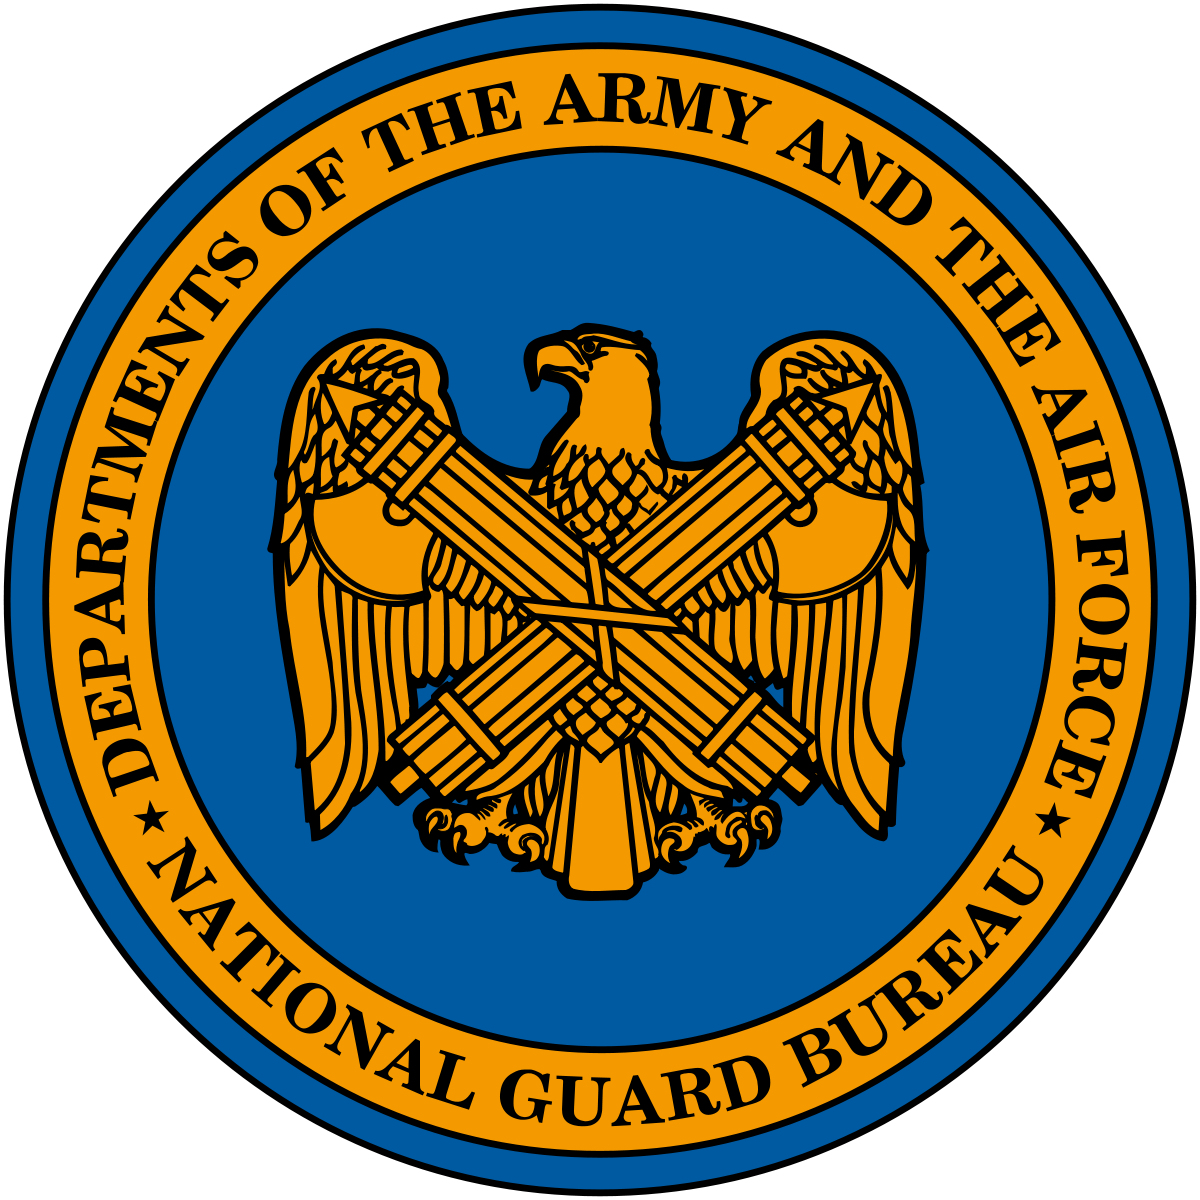 National Guard Bureau logo